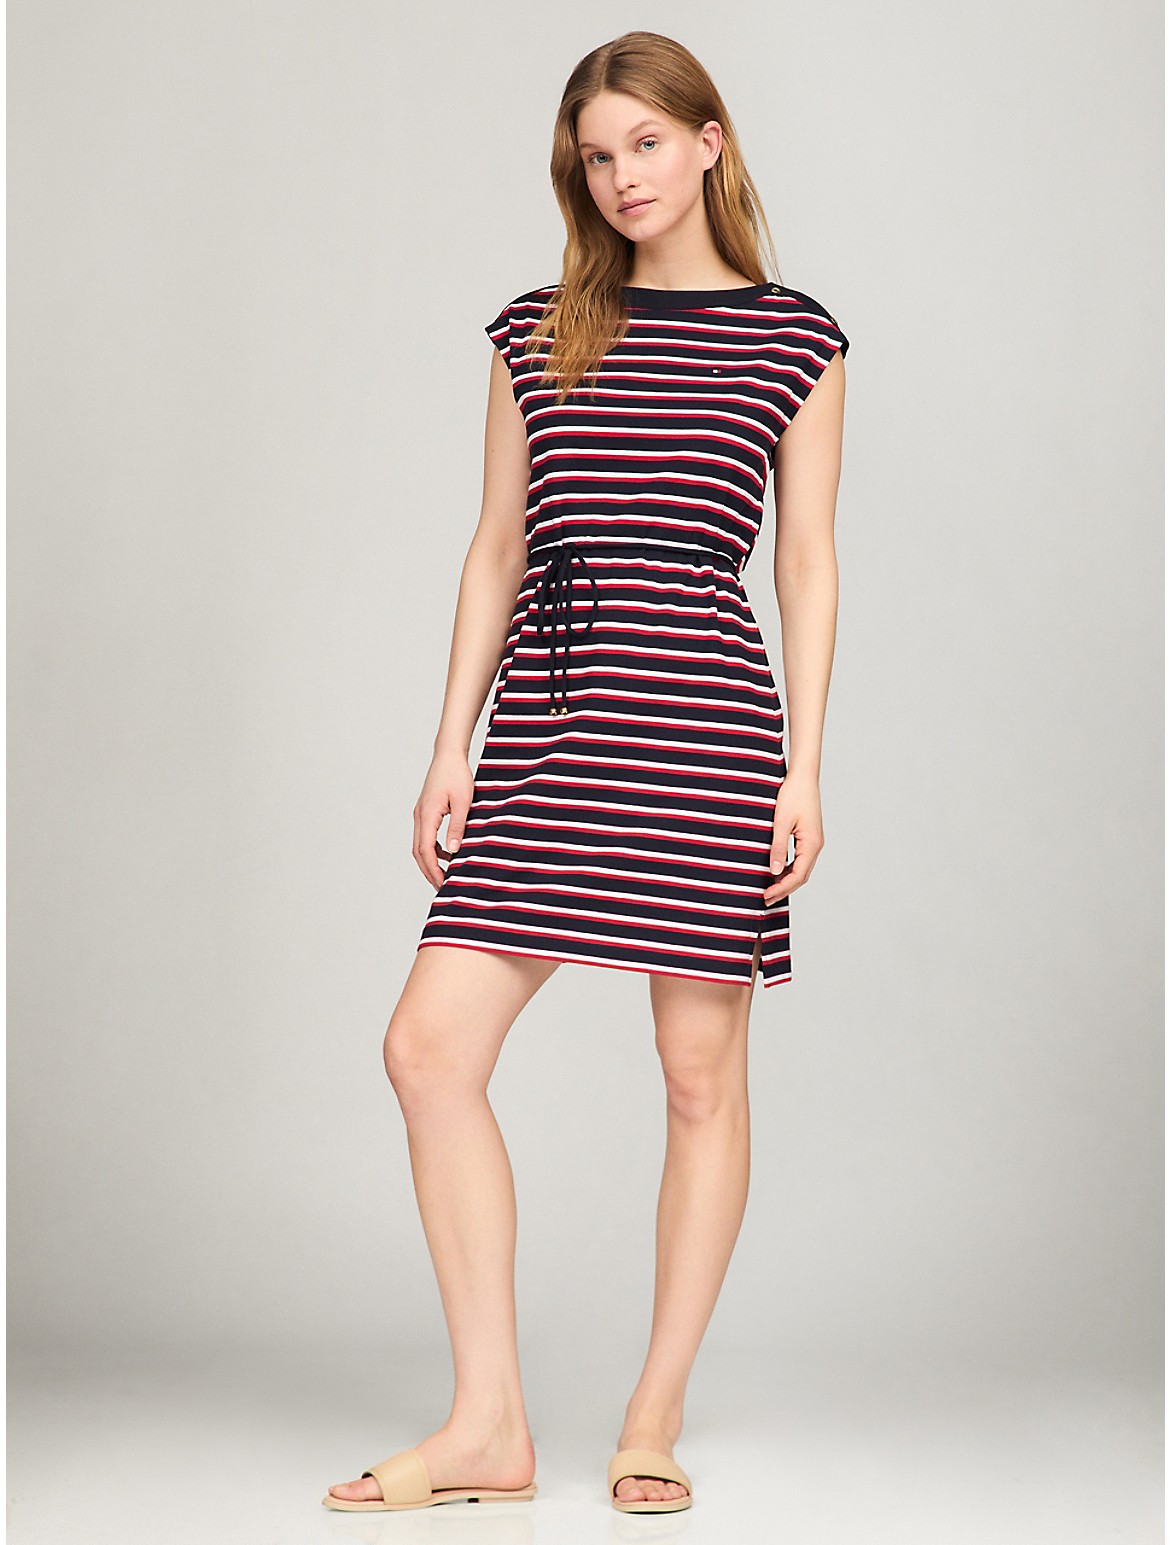 Tommy Hilfiger Women's Everyday Stripe Dress